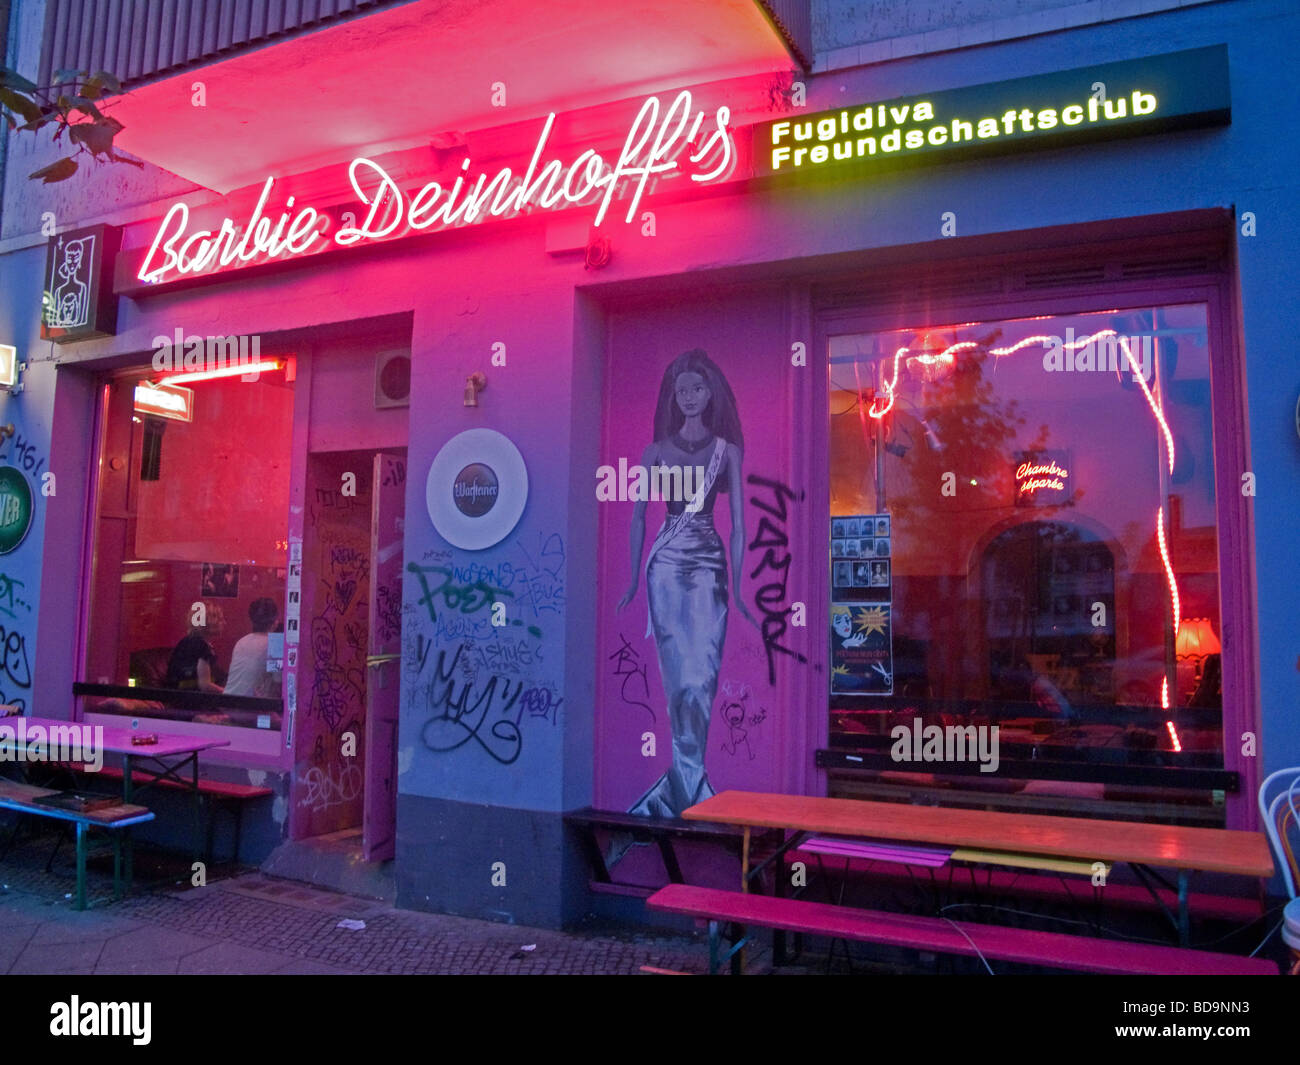 ejendom Efternavn trussel Barbie Deinhoffs Club and Bar in Kreuzberg Berlin Stock Photo - Alamy